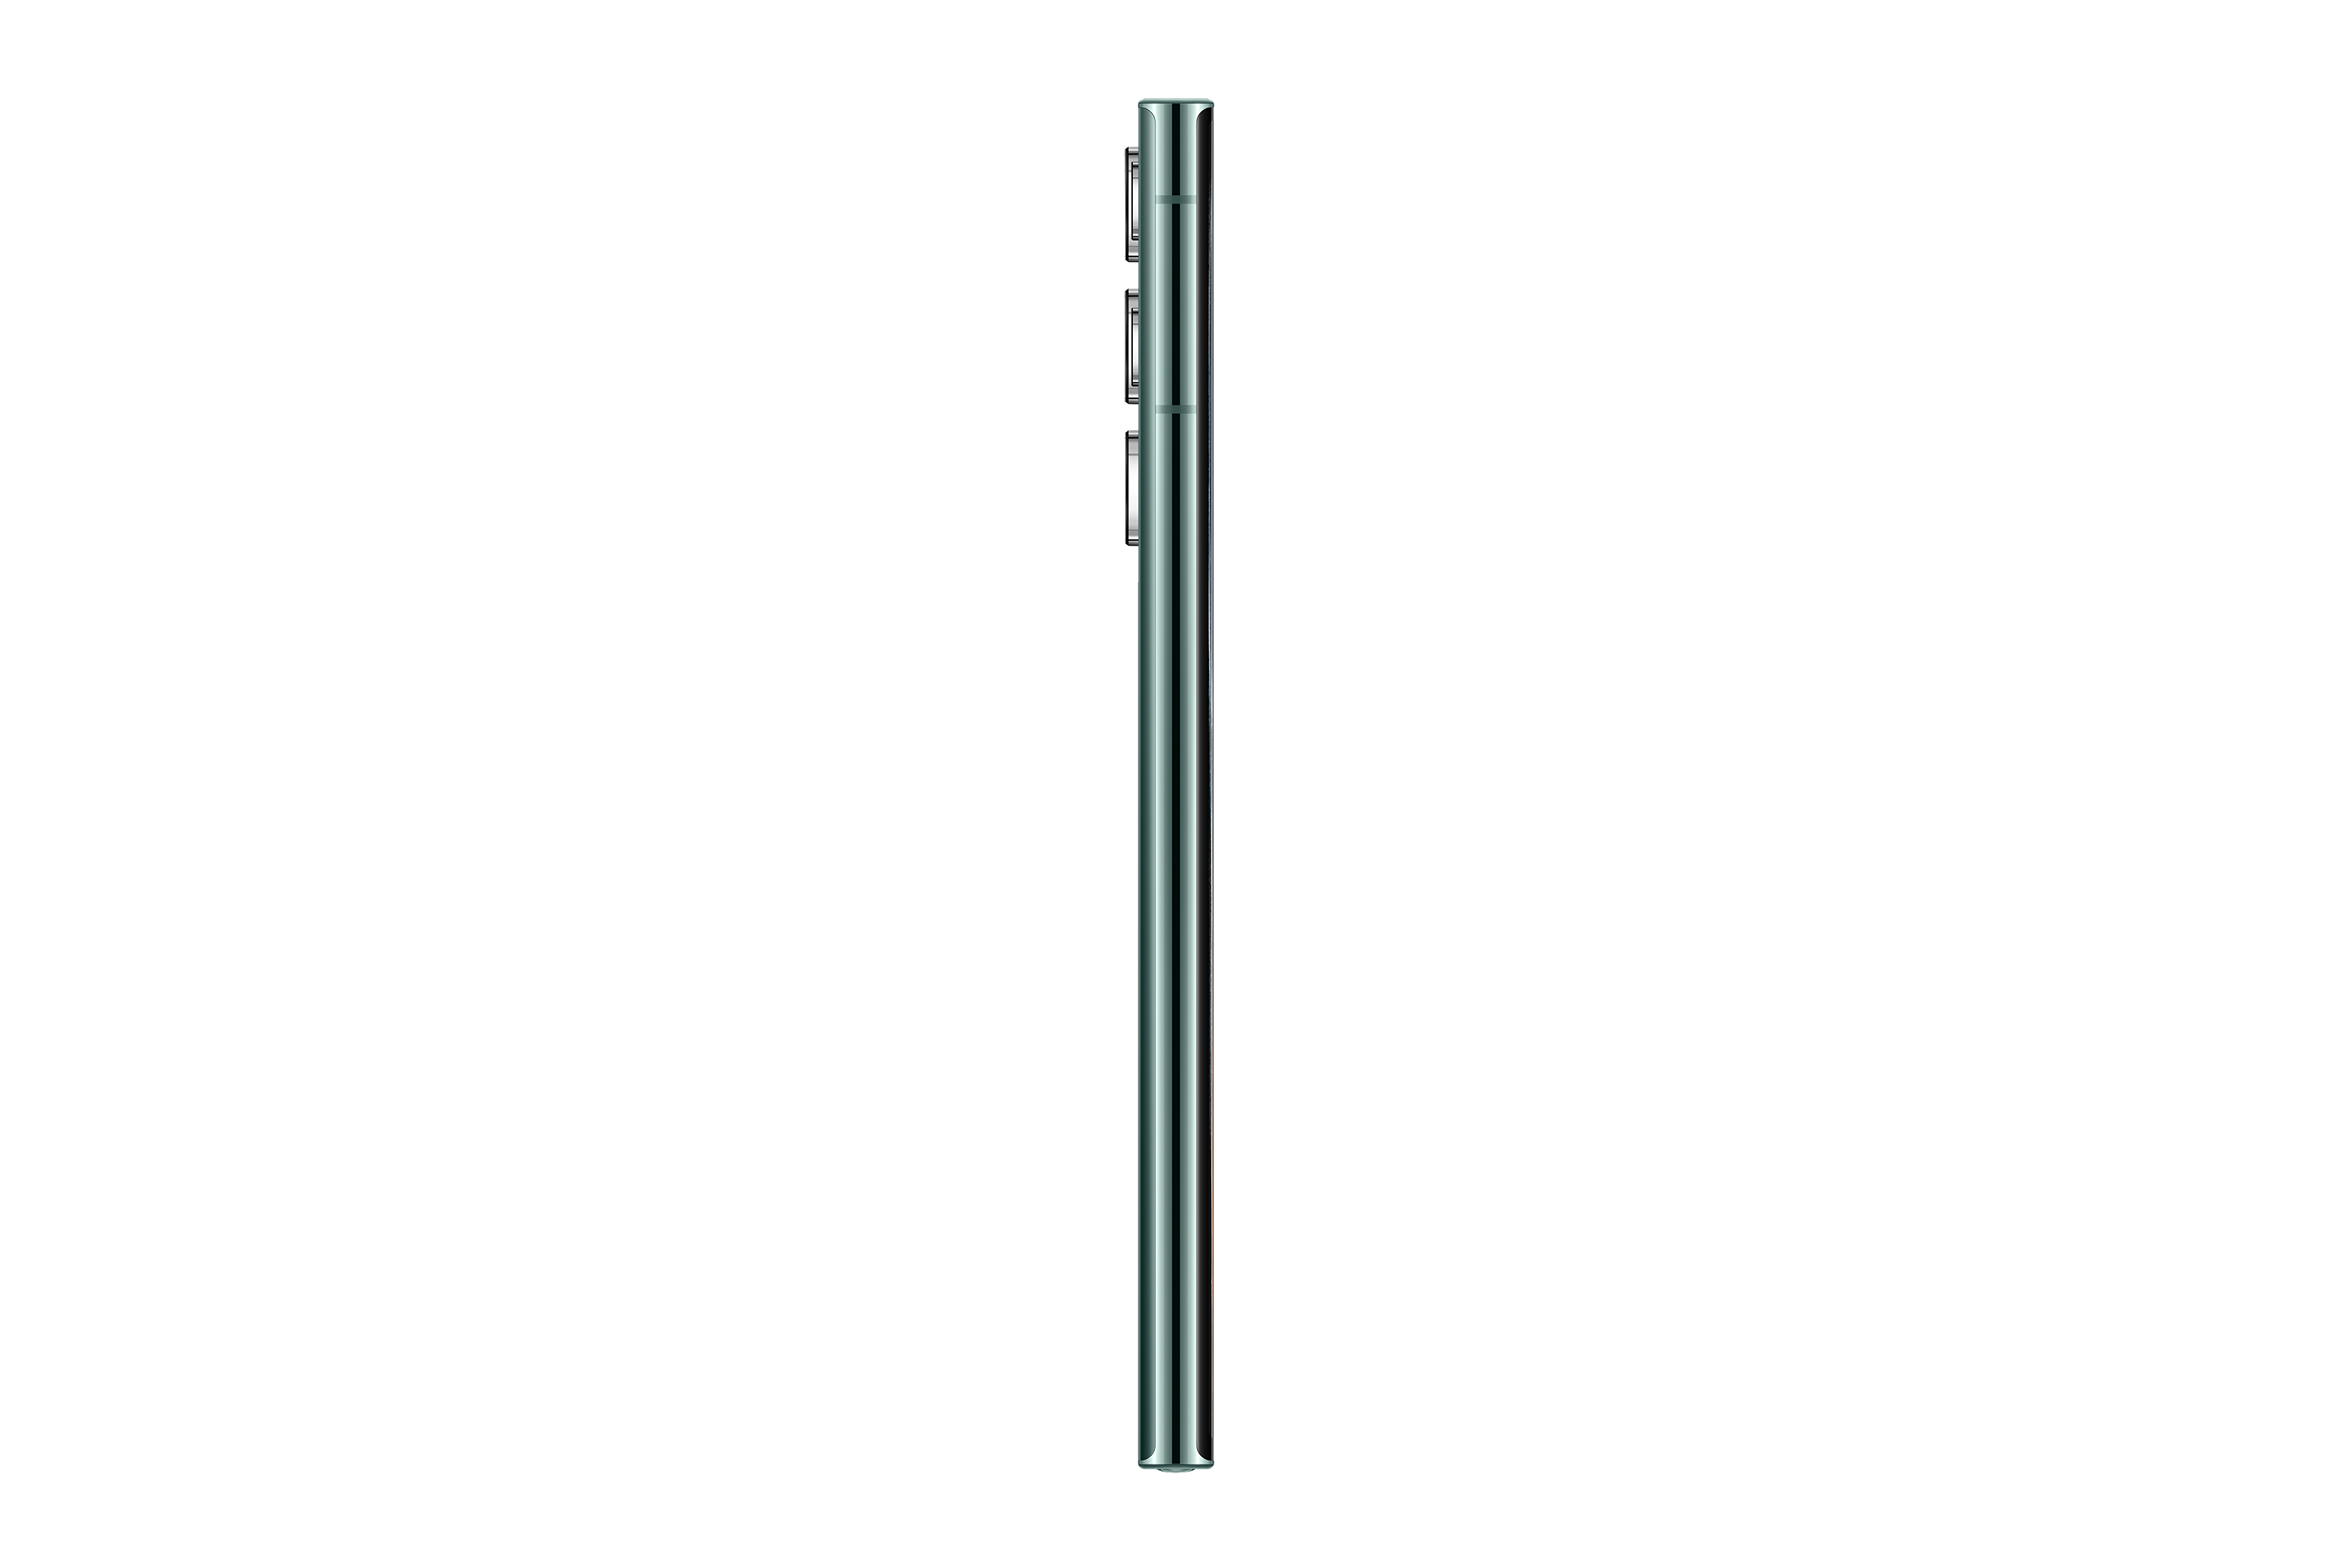 Green 512 SAMSUNG S22 5G GB SIM Ultra Galaxy Dual